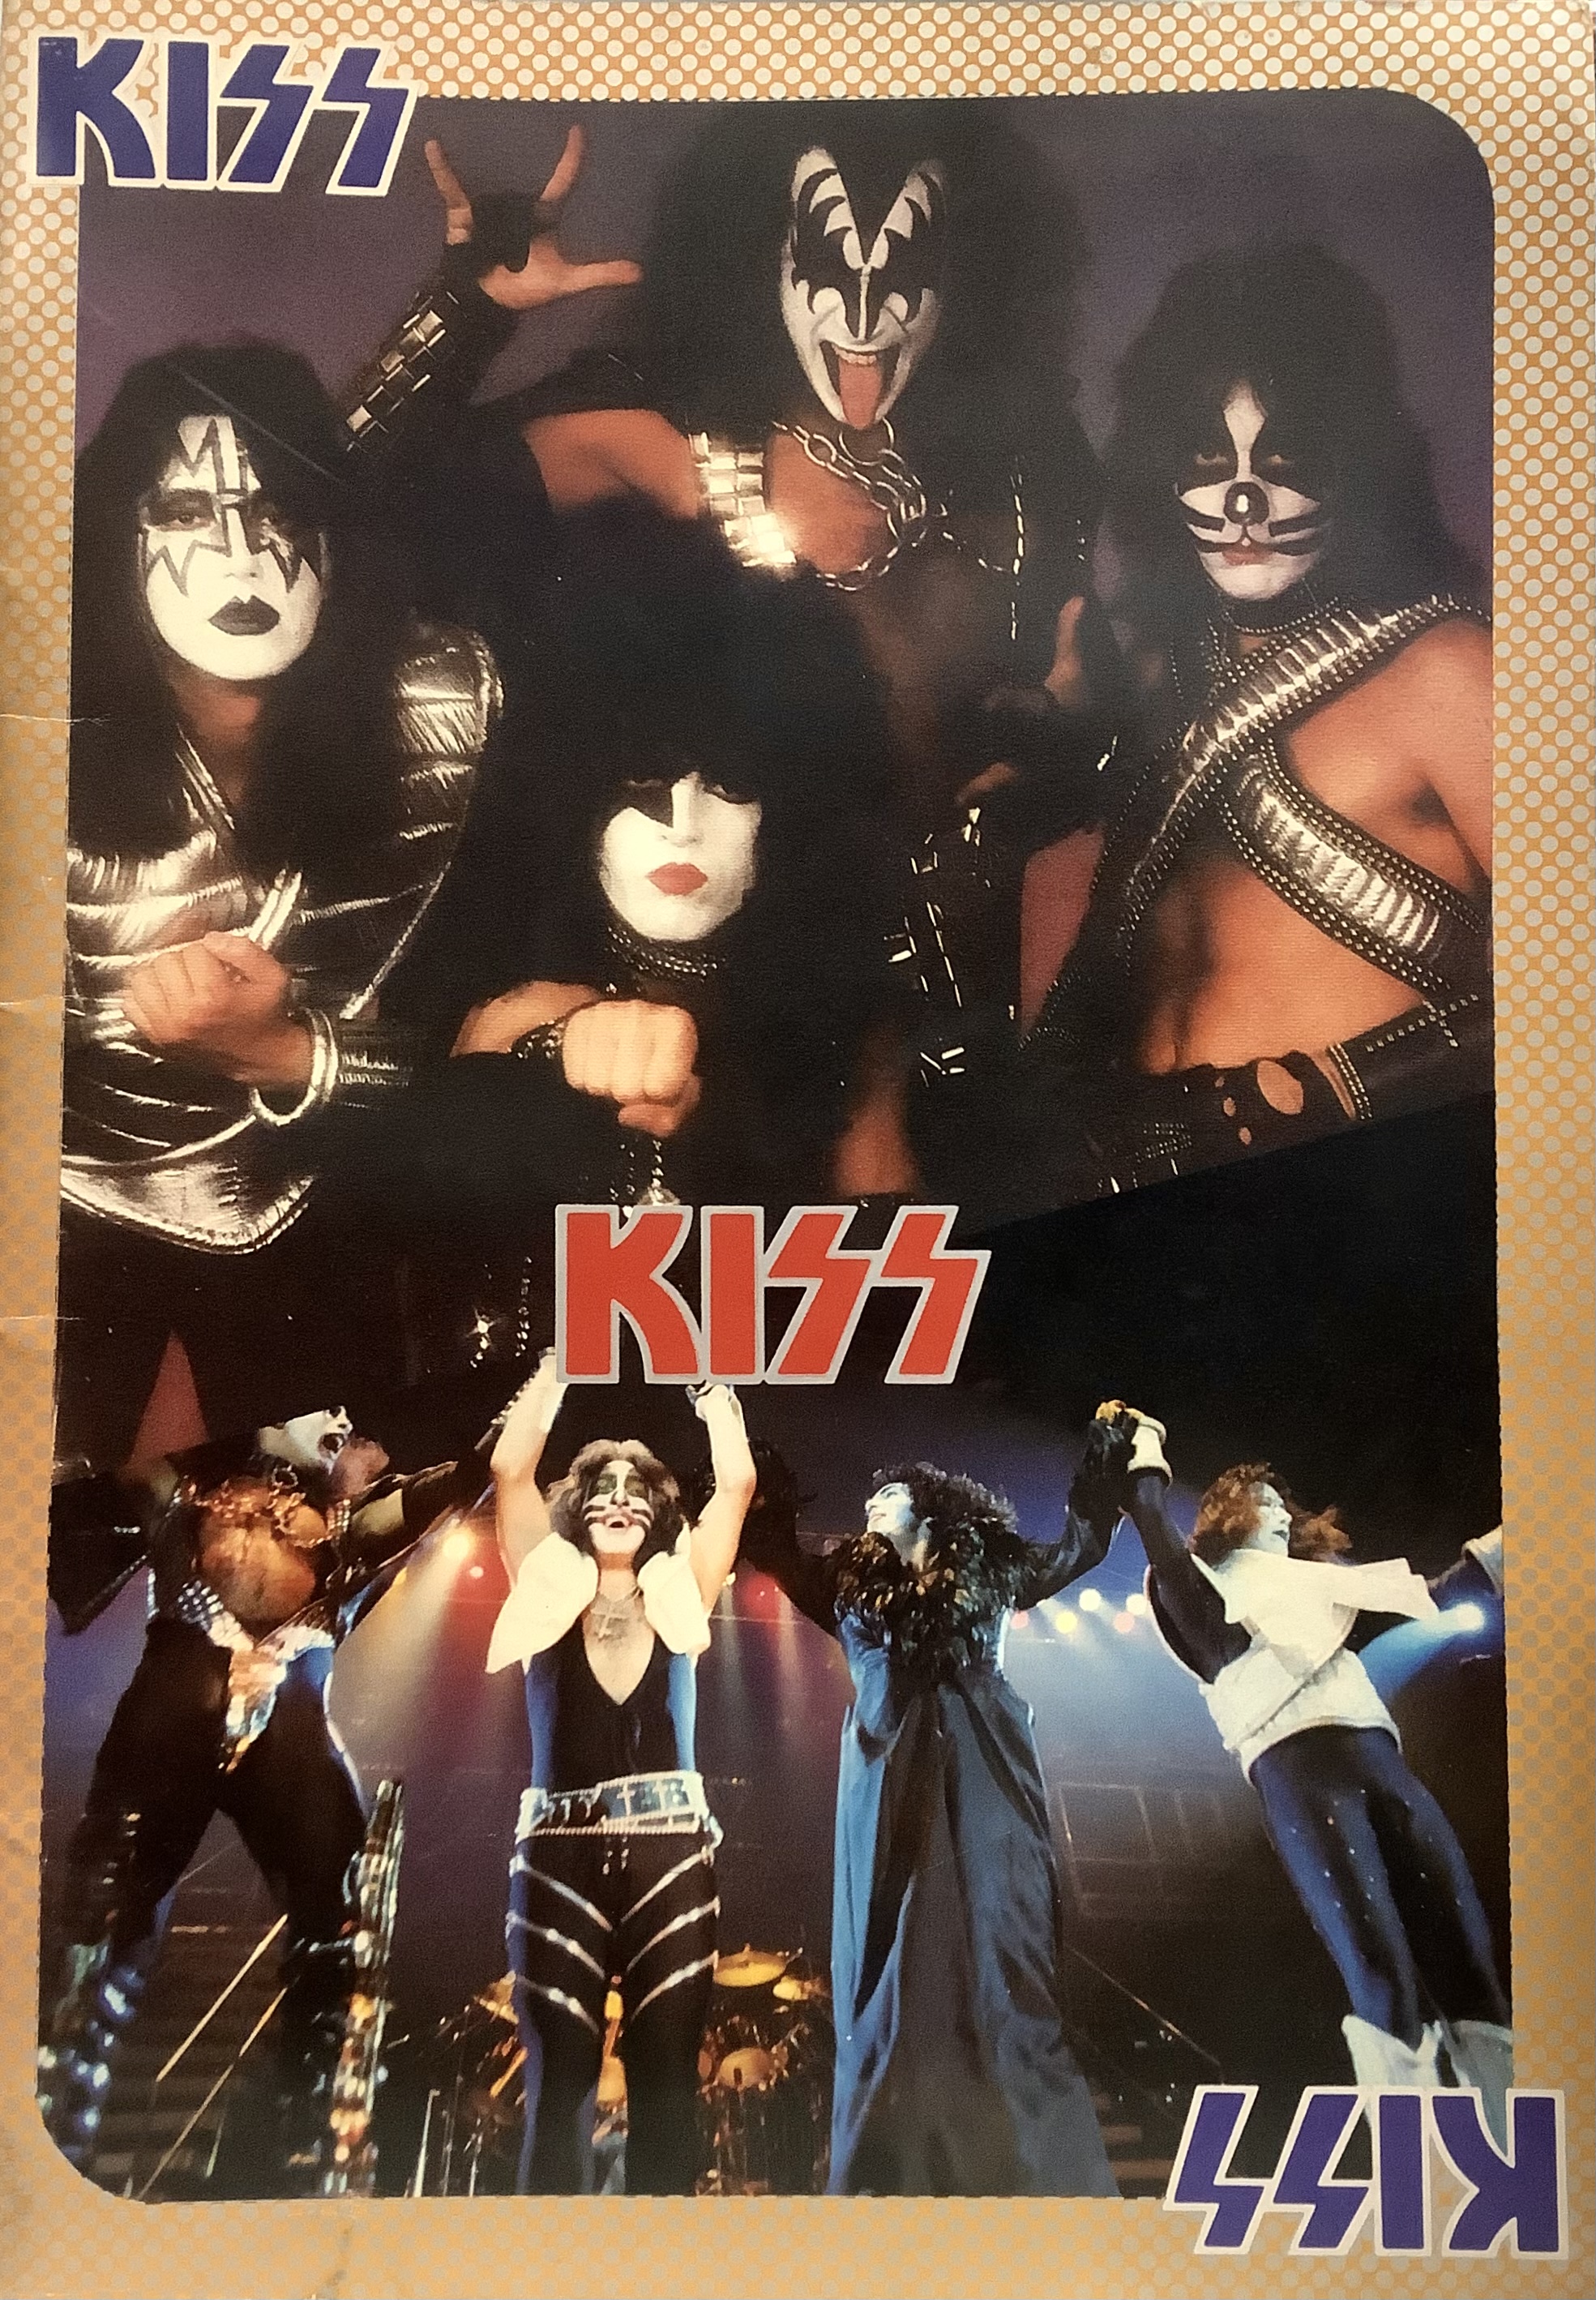 S/ツアーパンフレット/KISS/キッス/日本公演/1977年/初来日コンサート 